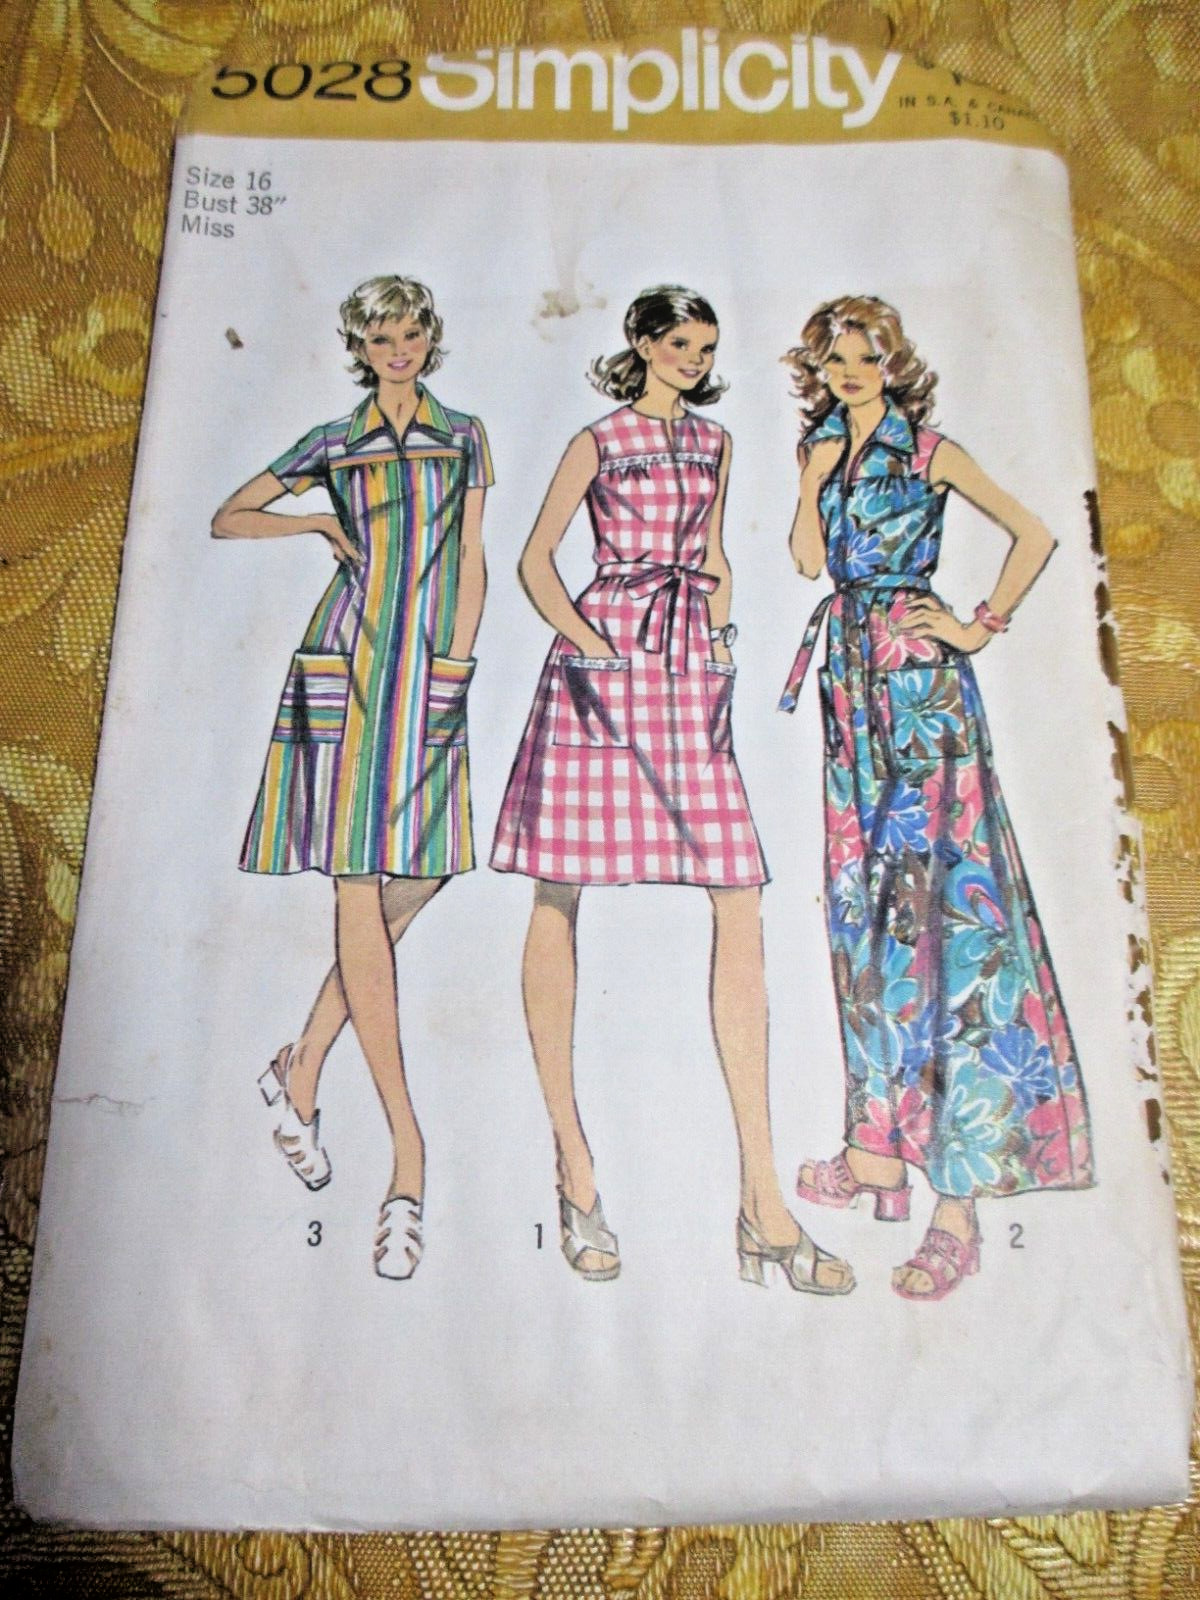 Simplicity 5028 Vintage Sewing Pattern 1972 Misse Smock Dress Size 16 38 Cut